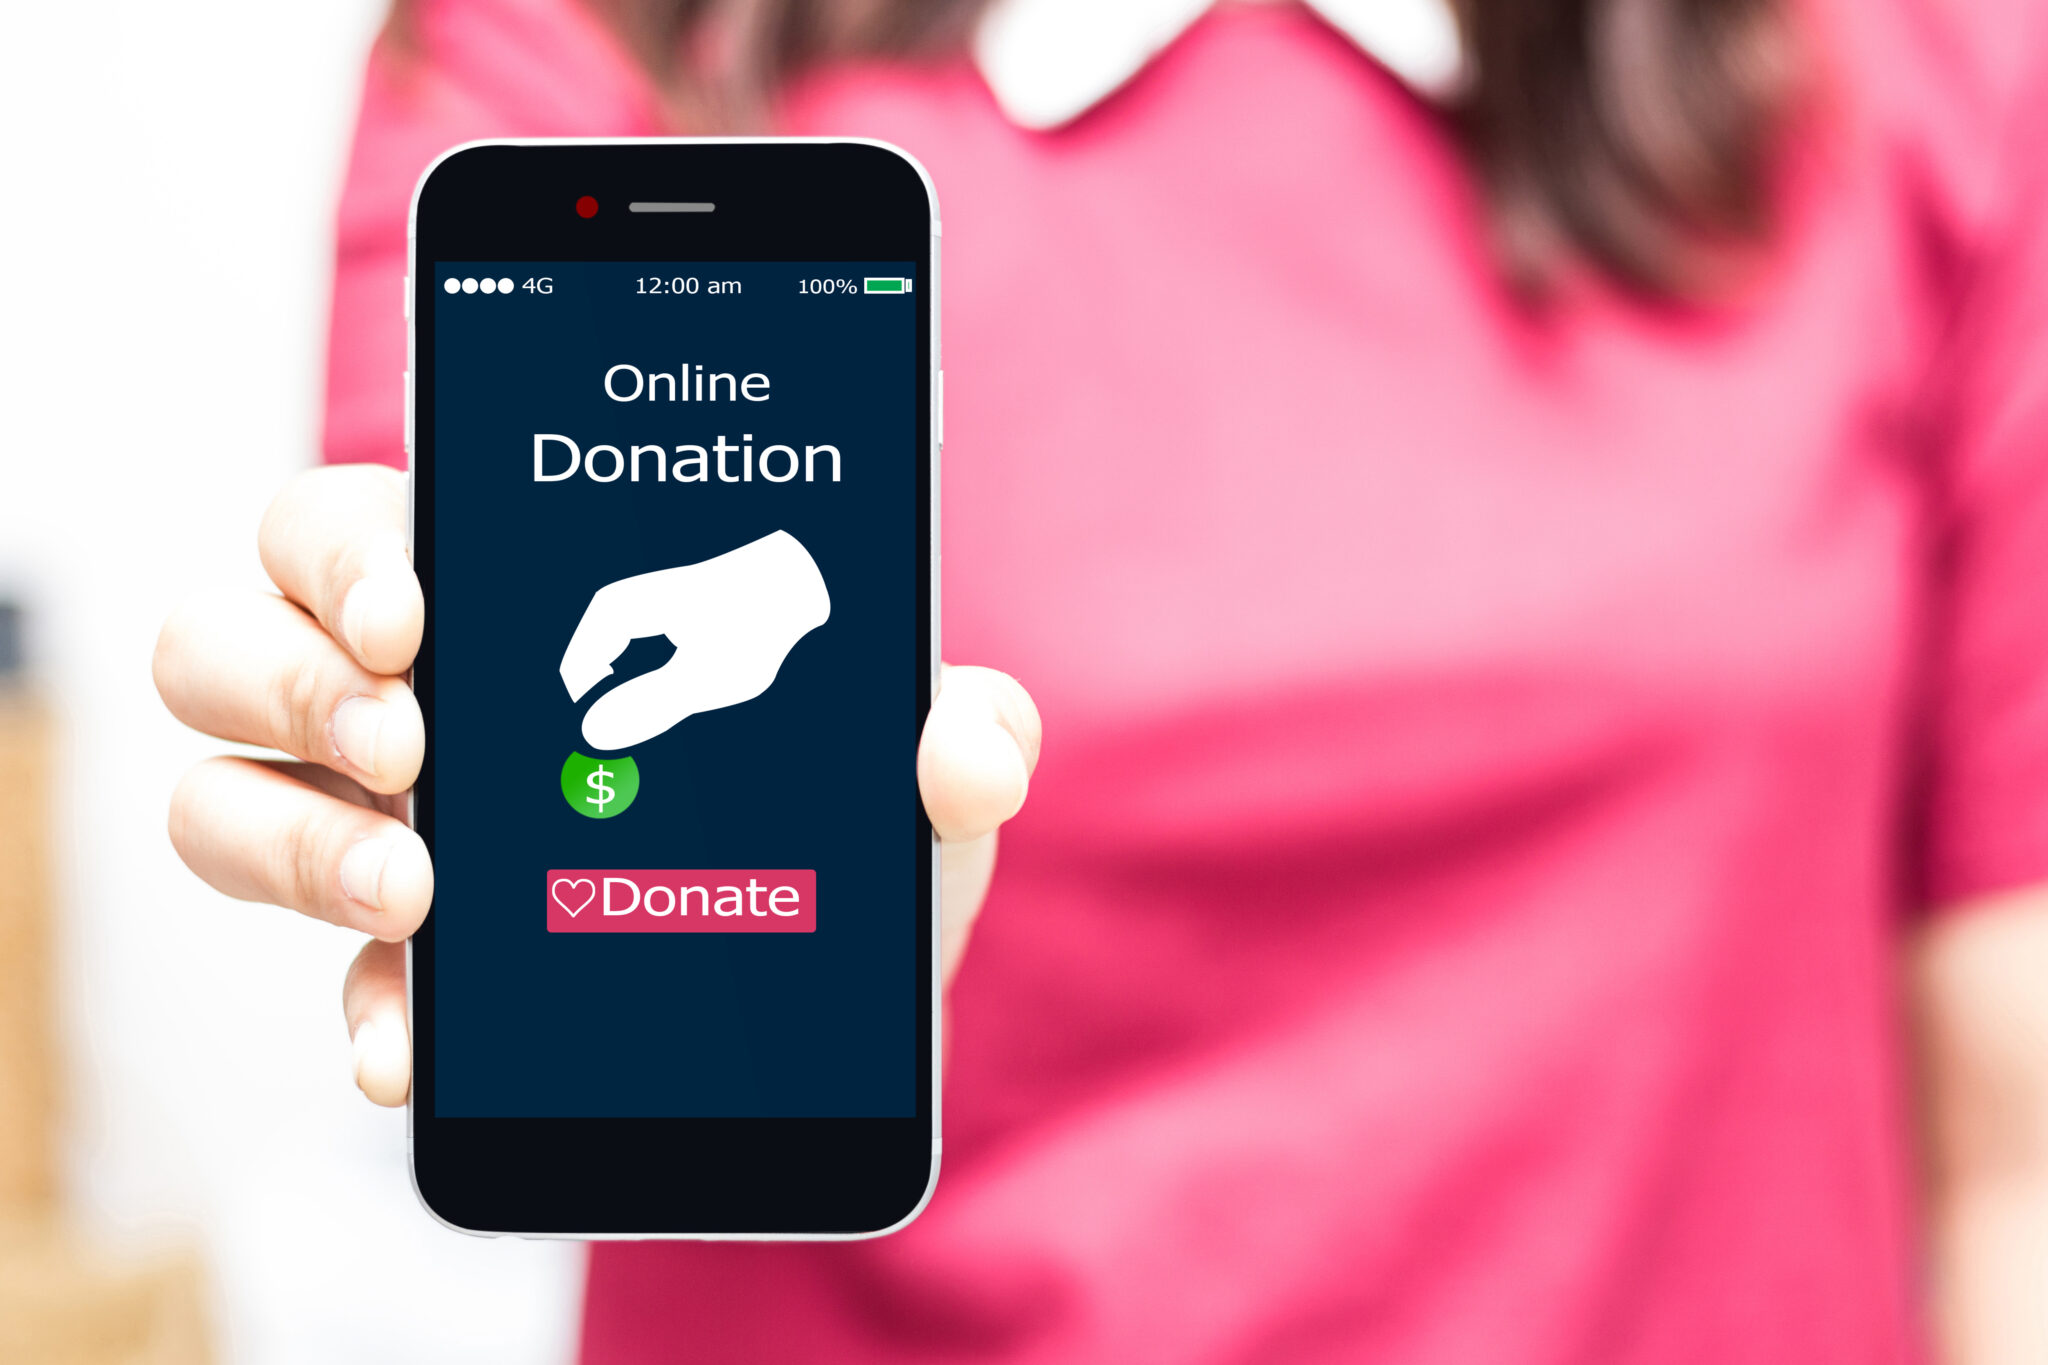 Online Donation Fundraiser